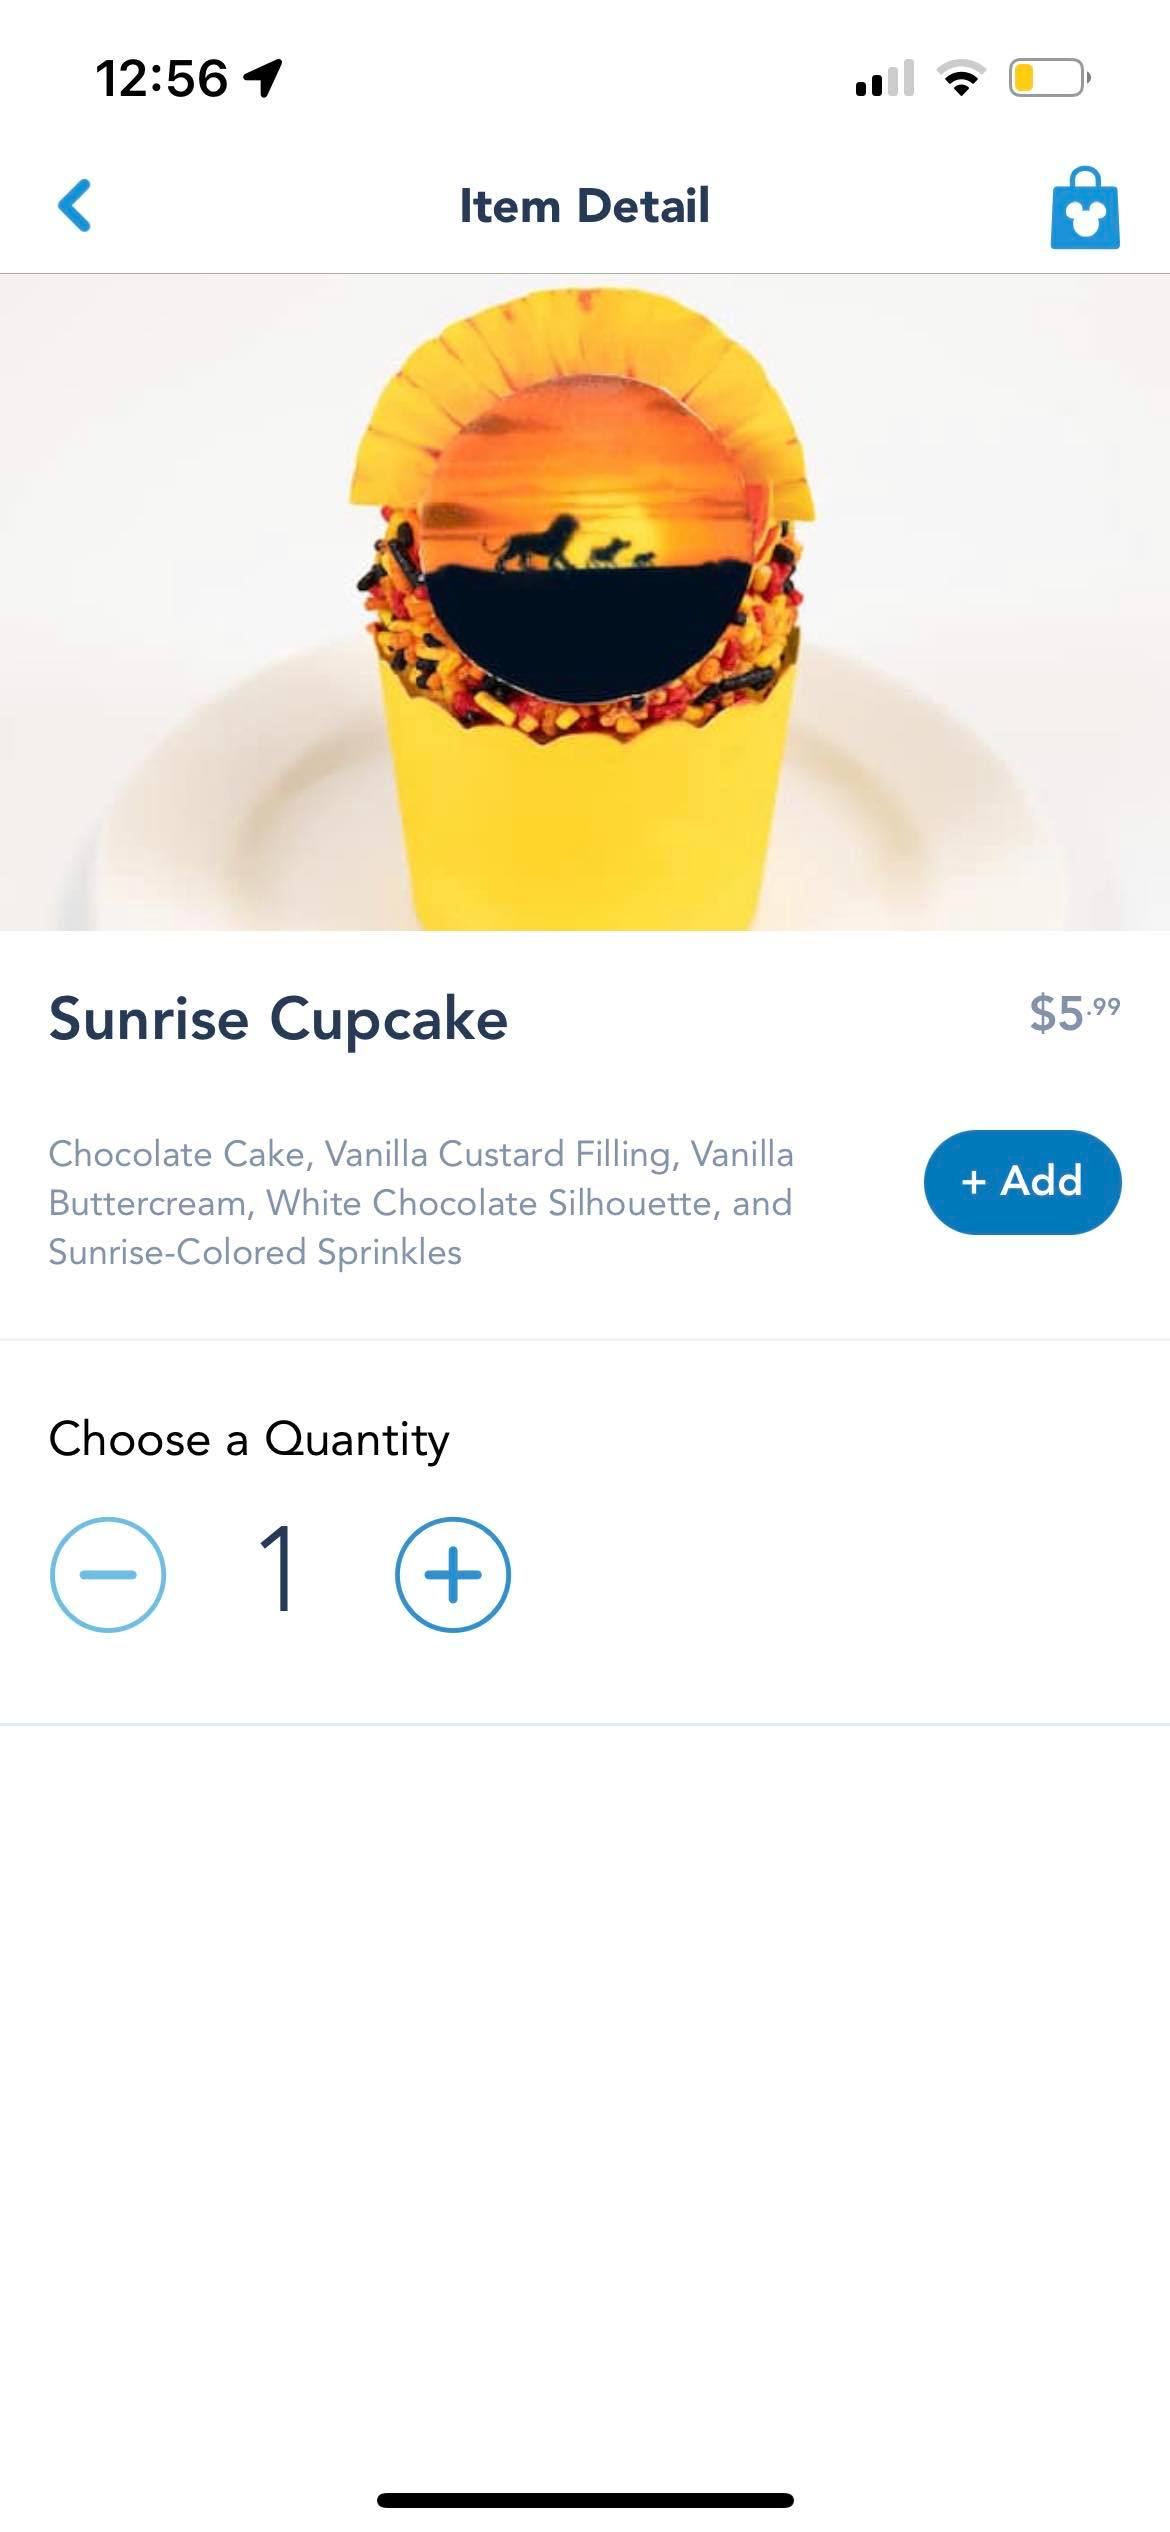 Sunrise Cupcake